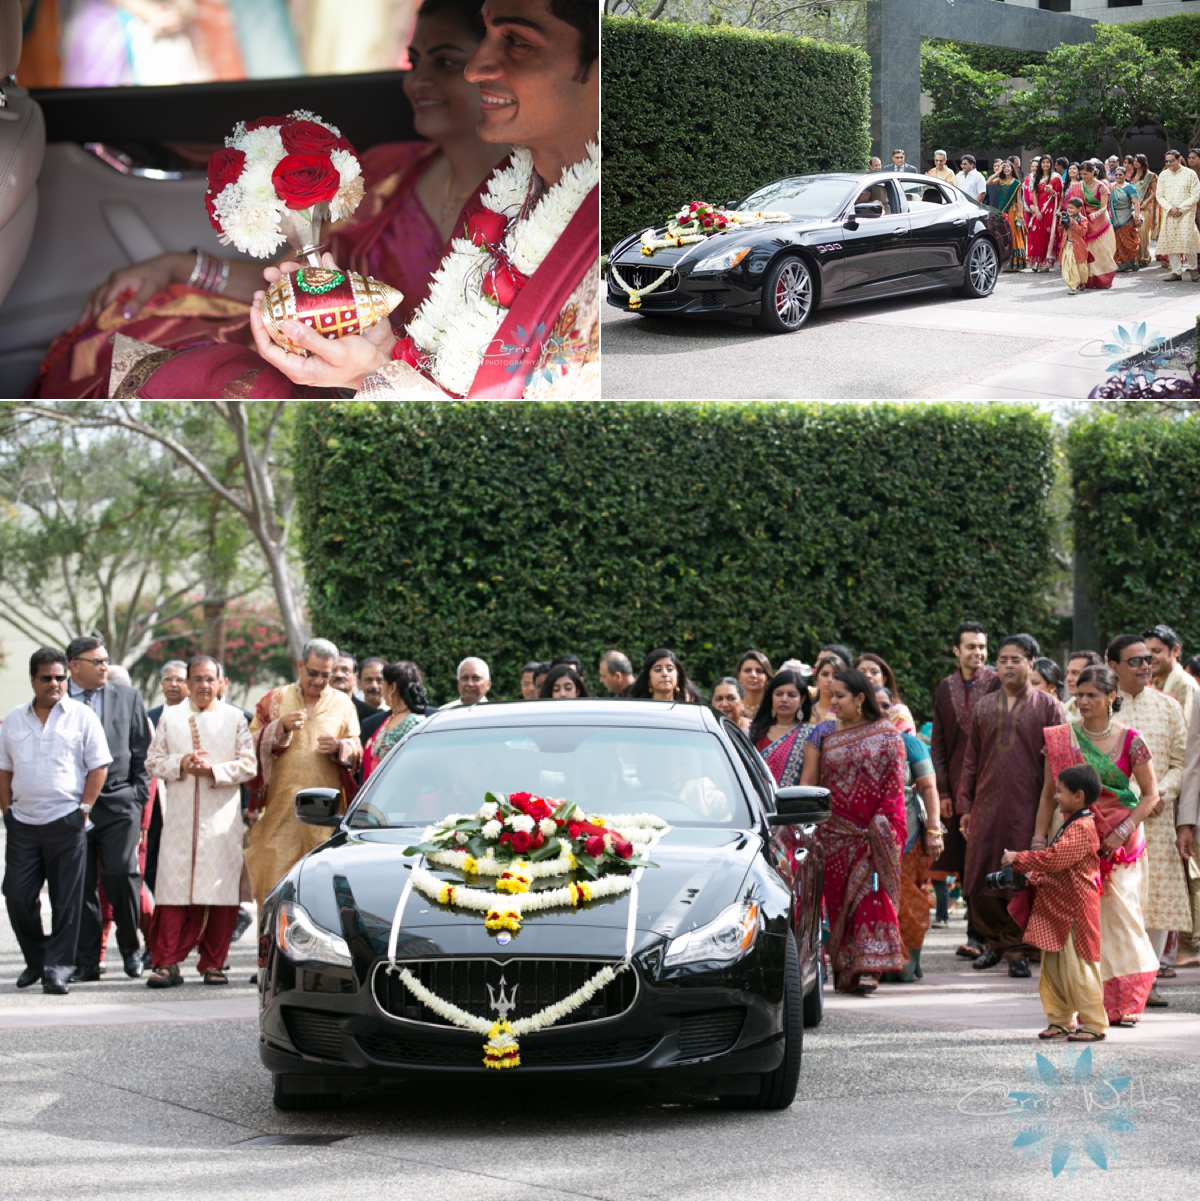 8_17_13 Grand Hyatt Tampa Bay Indian Wedding_0011.jpg